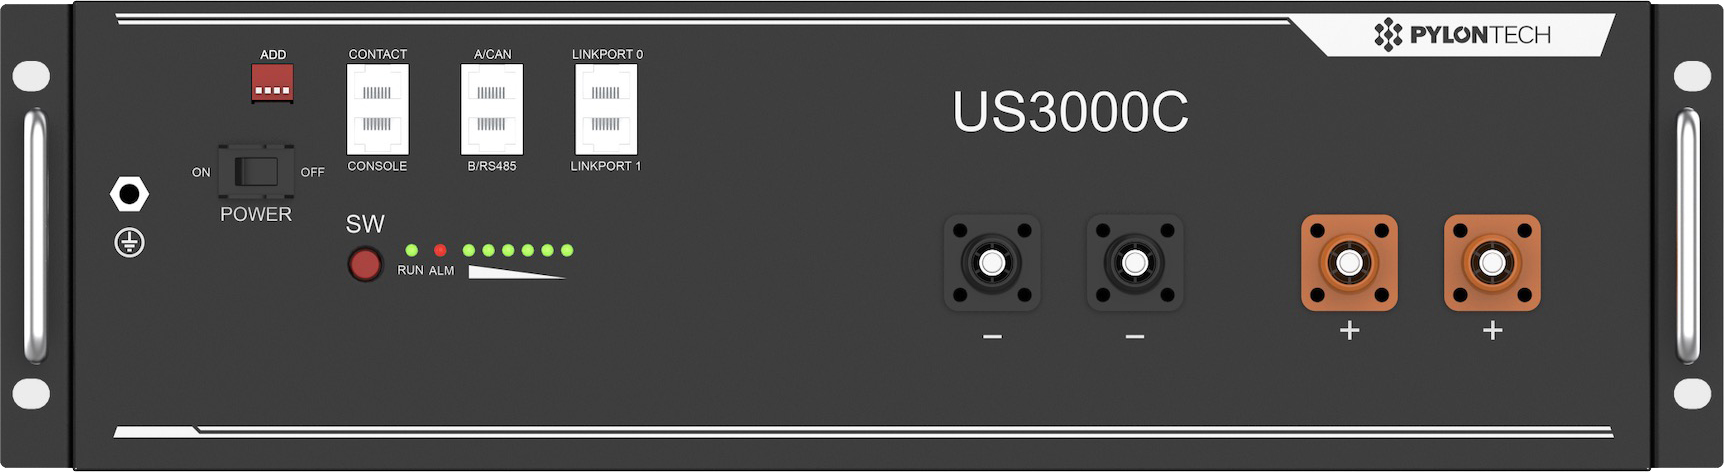 Aккумулятор Pylontech US3000C цена 49999.00 грн - фотография 2